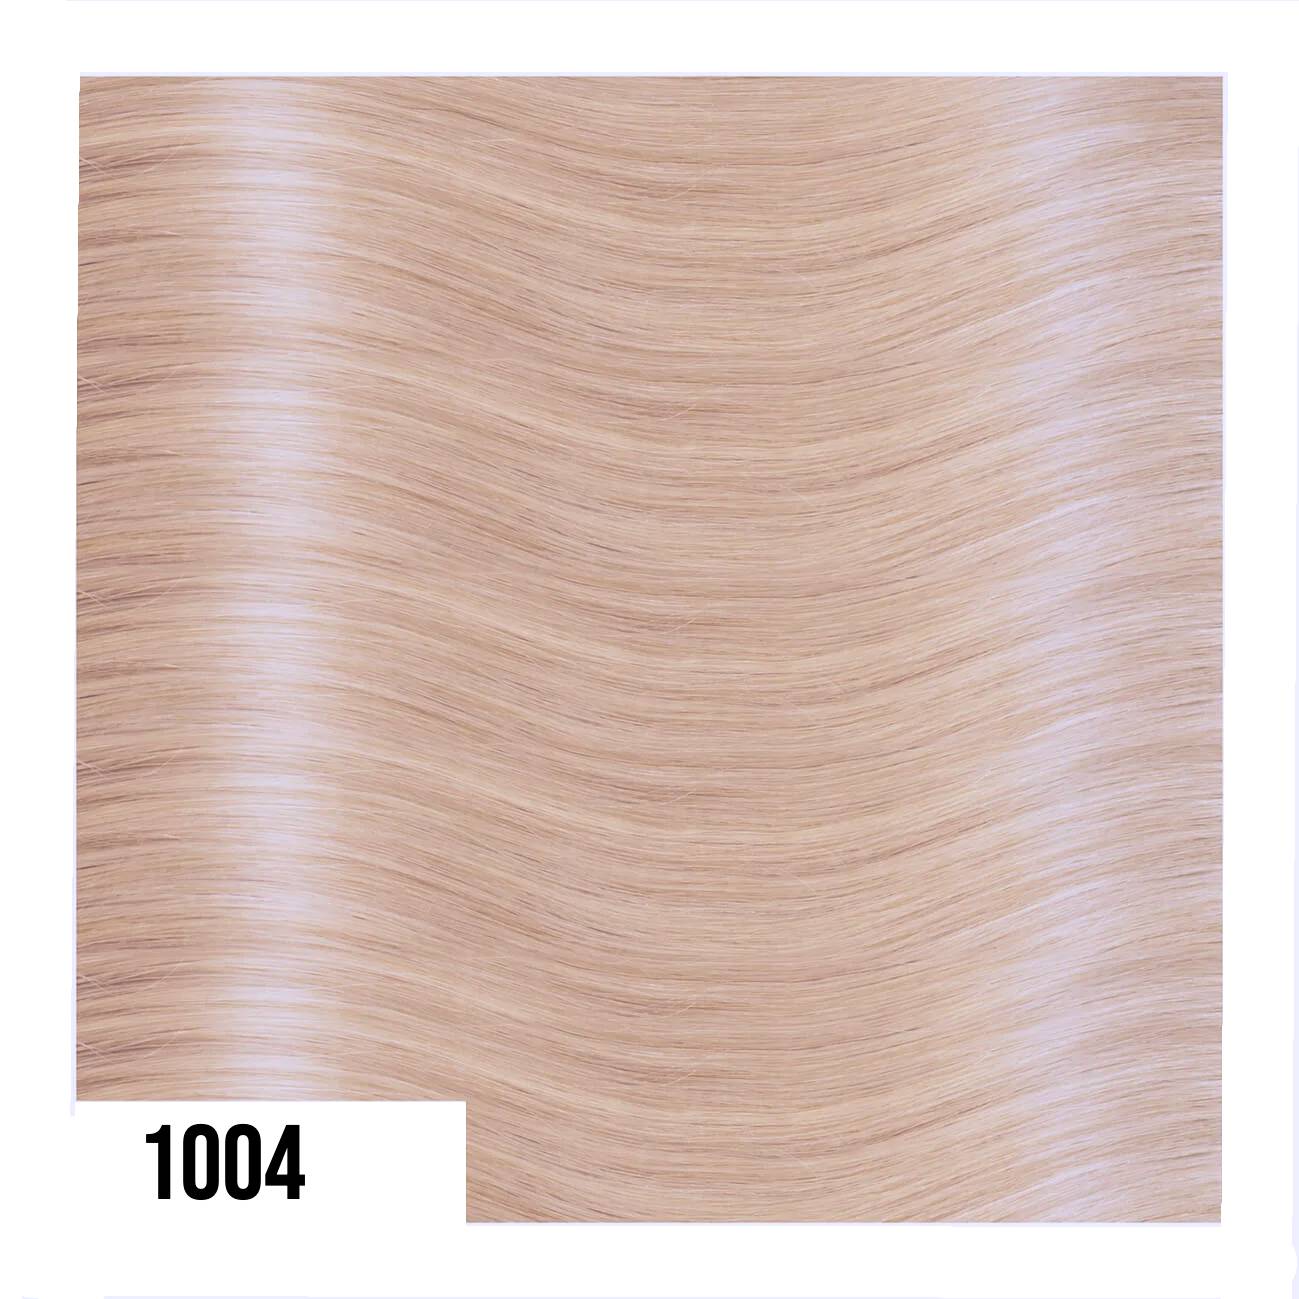 In Tape Hair extension Capelli Lisci (30cm/35cm)